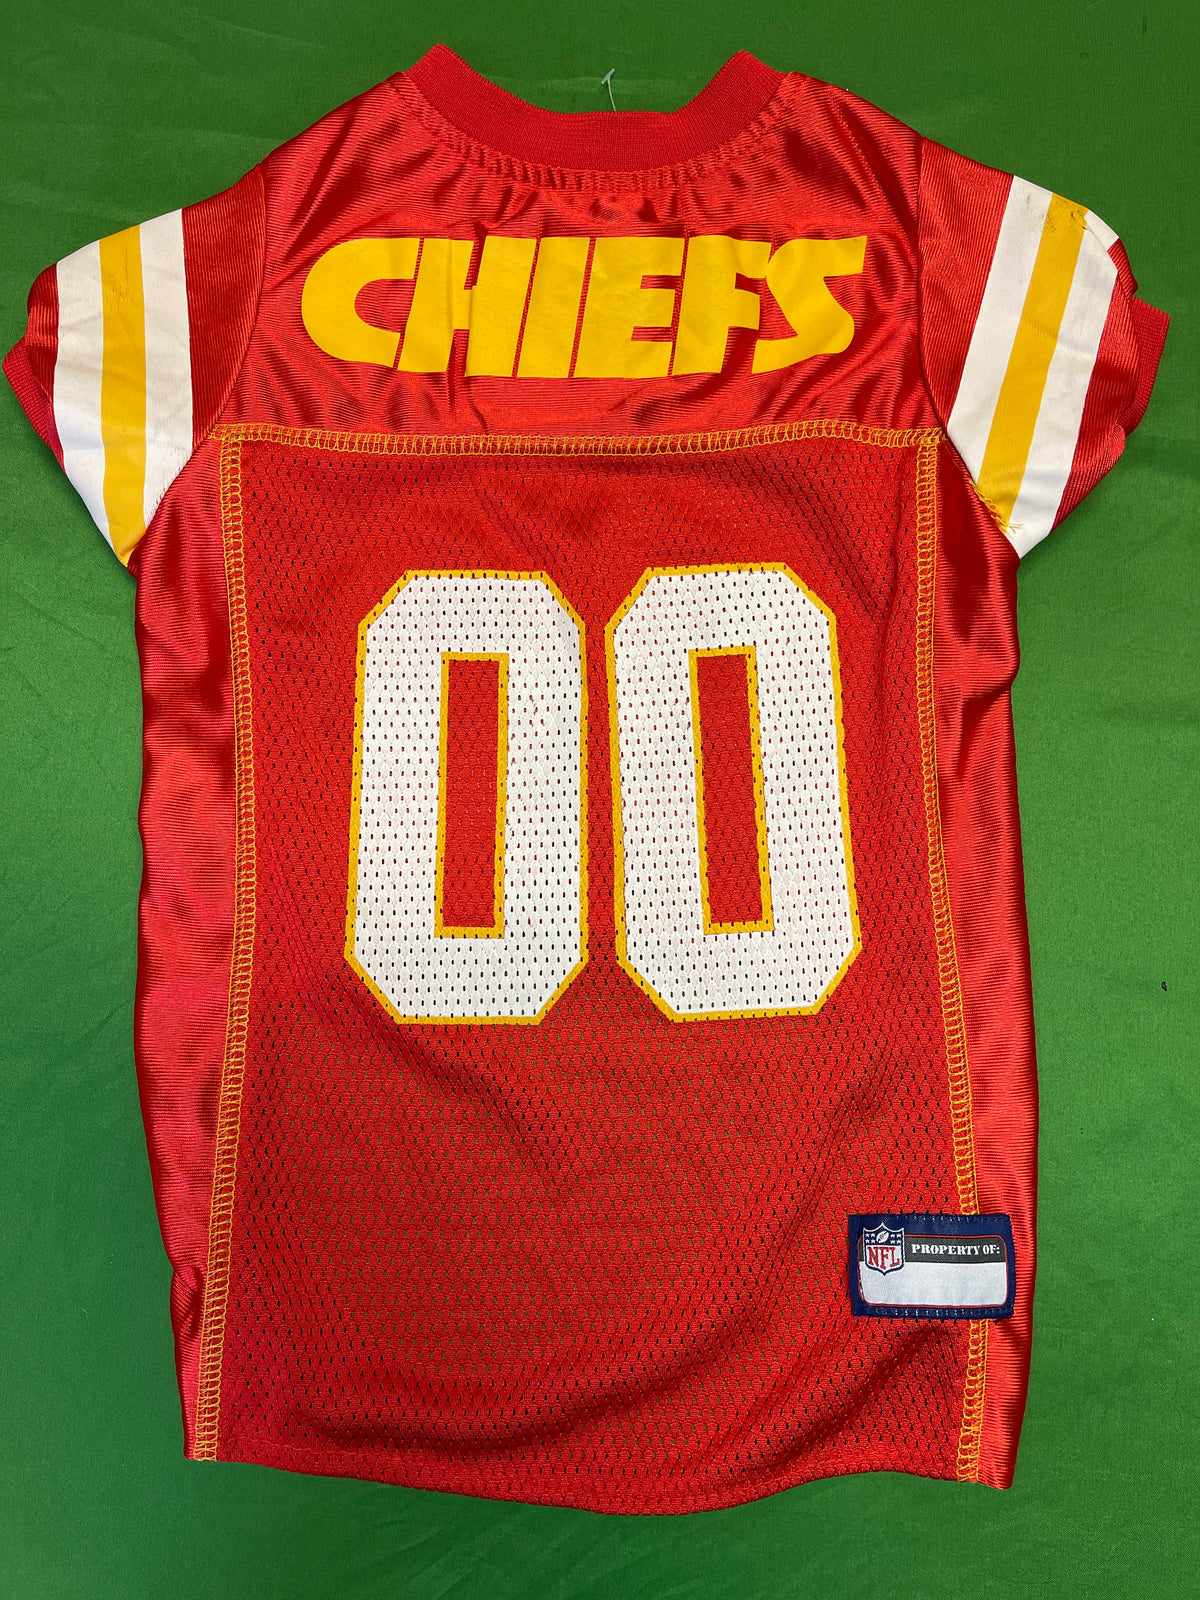 NFL Kansas City Chiefs #00 Red Mesh Dog Jersey Size Large